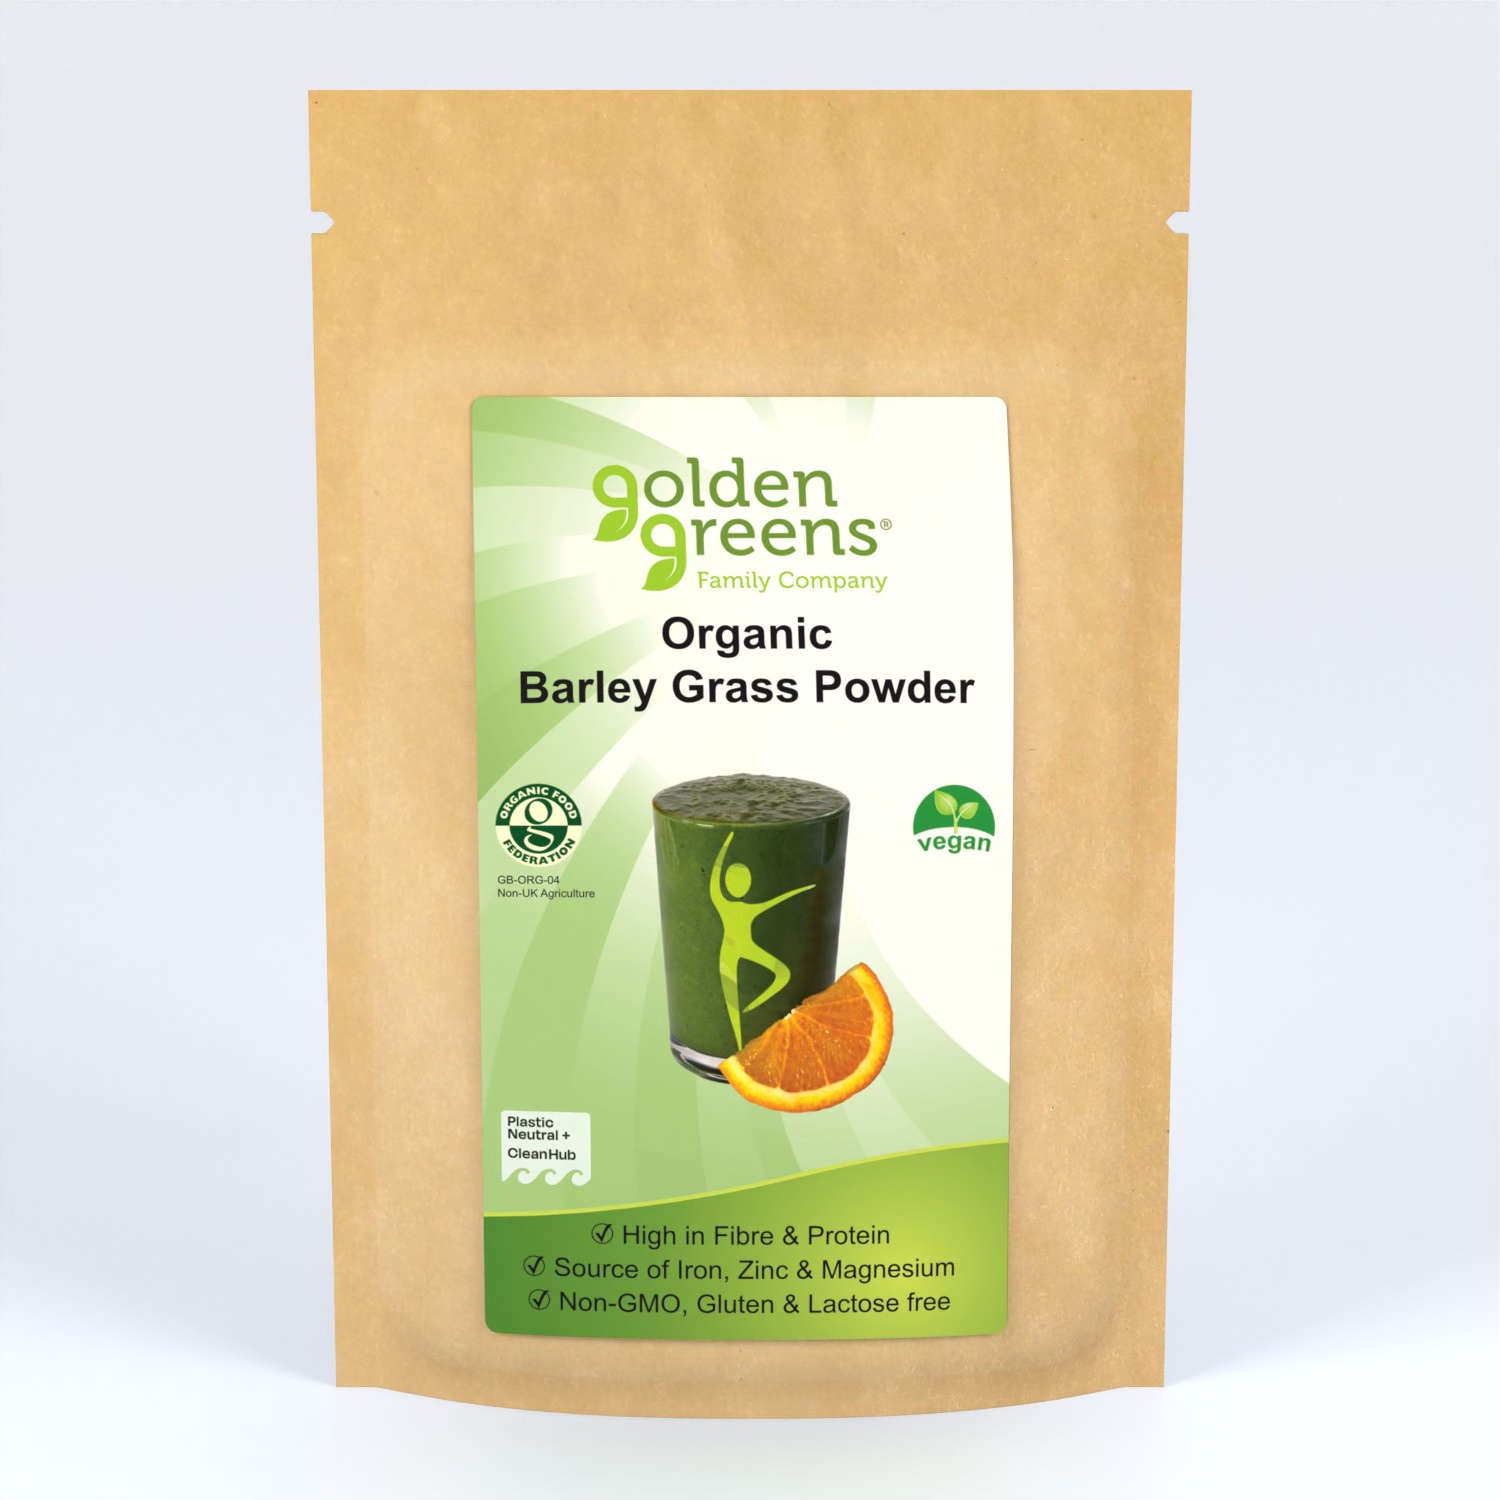 View Organic Barley Grass Powder New Zealand information